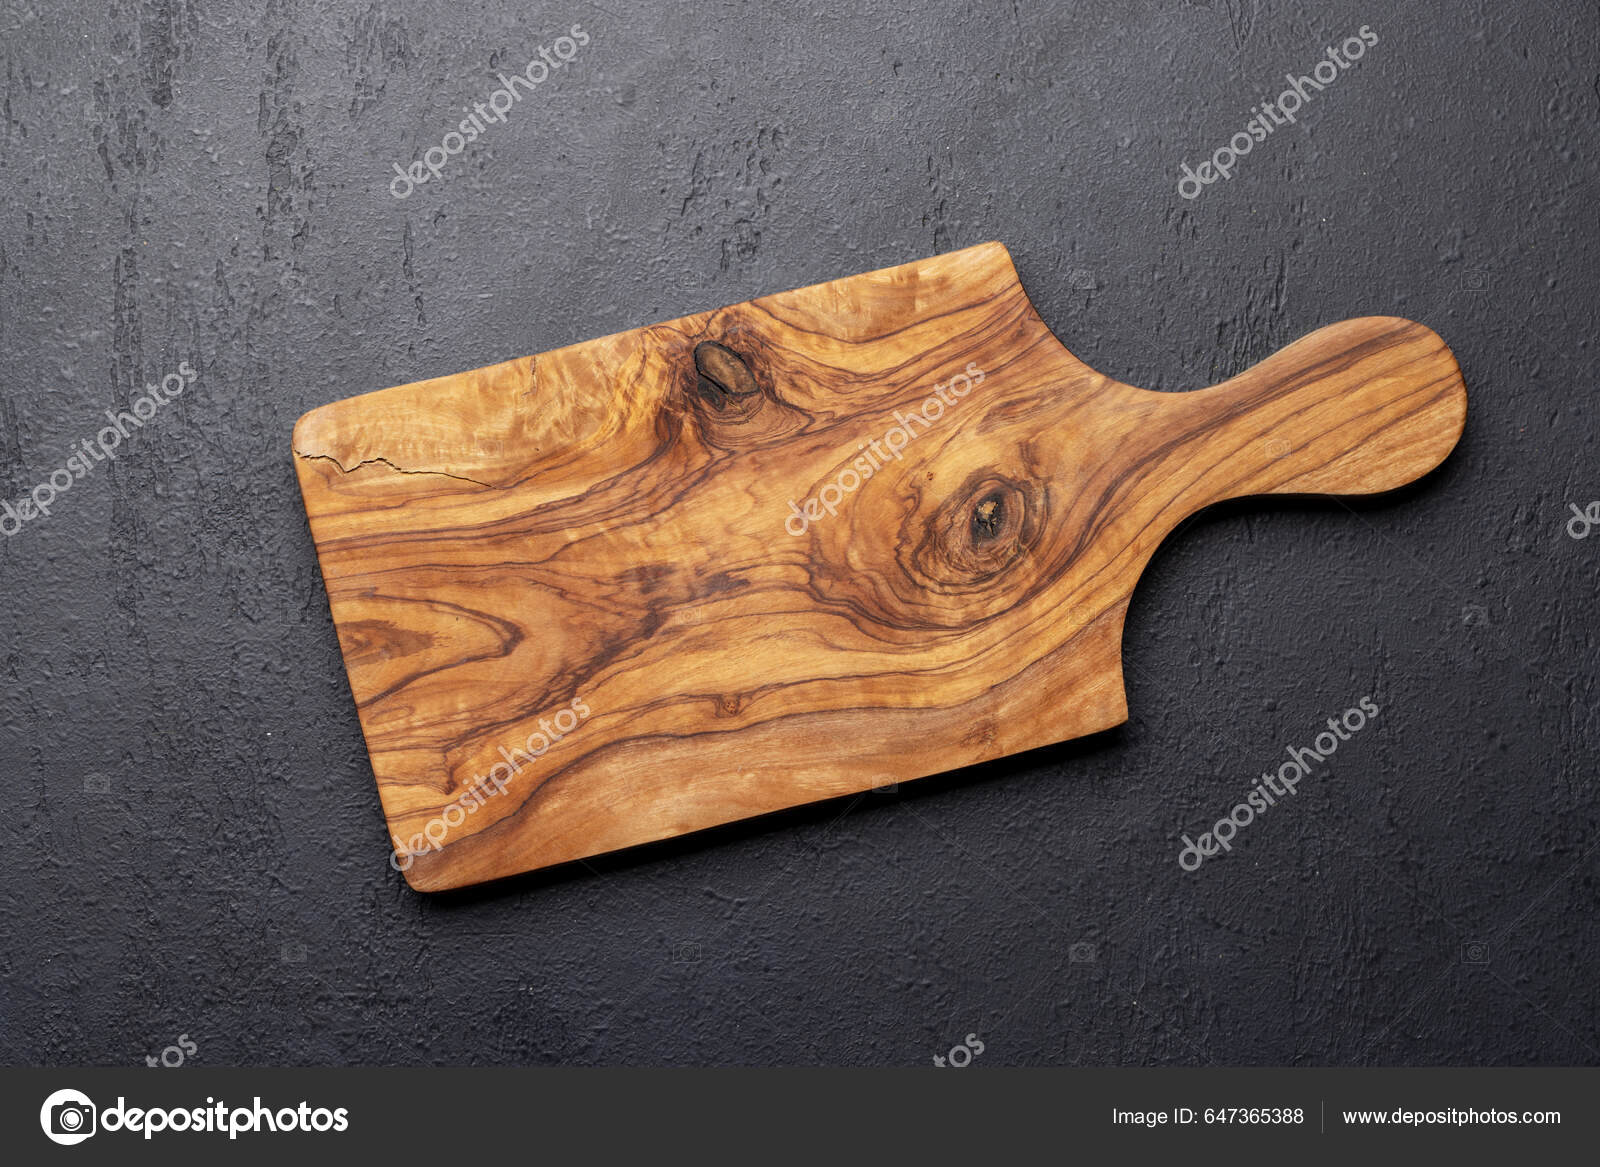 https://st5.depositphotos.com/1001069/64736/i/1600/depositphotos_647365388-stock-photo-wooden-cutting-board-stone-kitchen.jpg